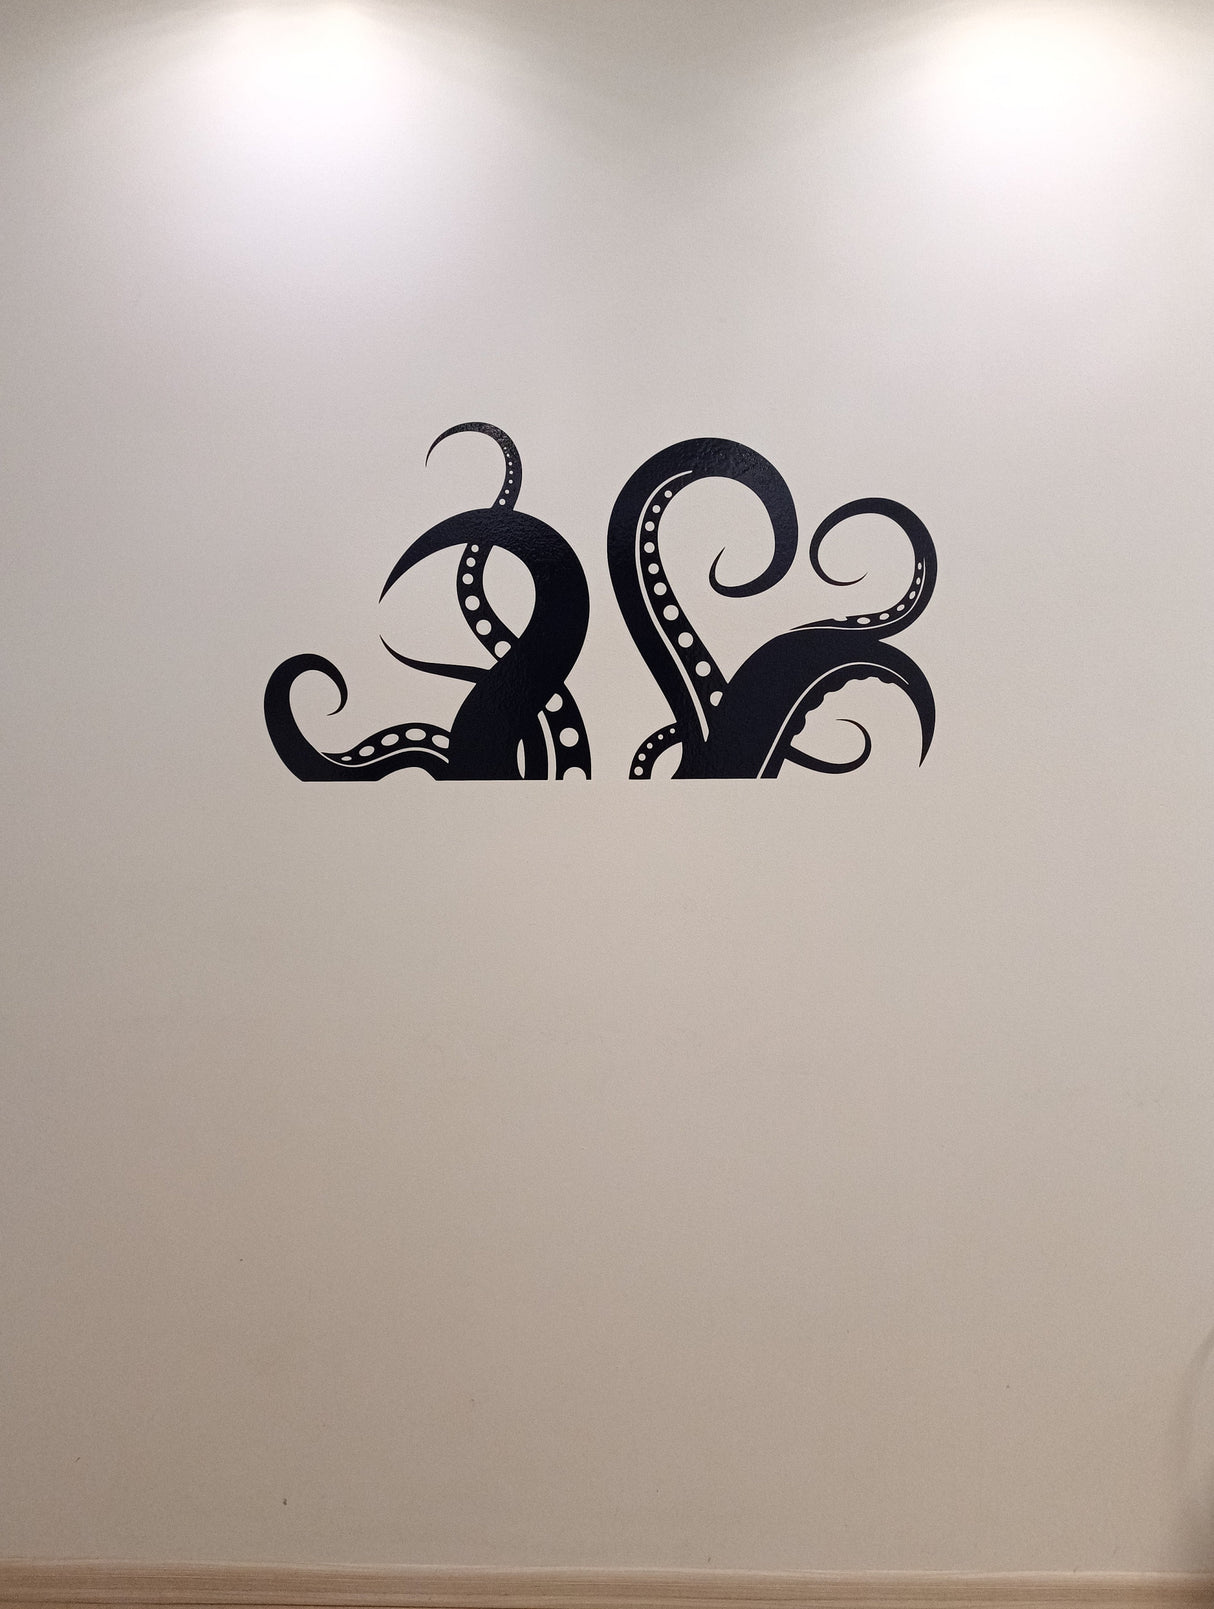 Octopus Tentacles Vinyl Wall Art Sticker - Bathroom Ocean Sea Creature Decor Die Cut Decal